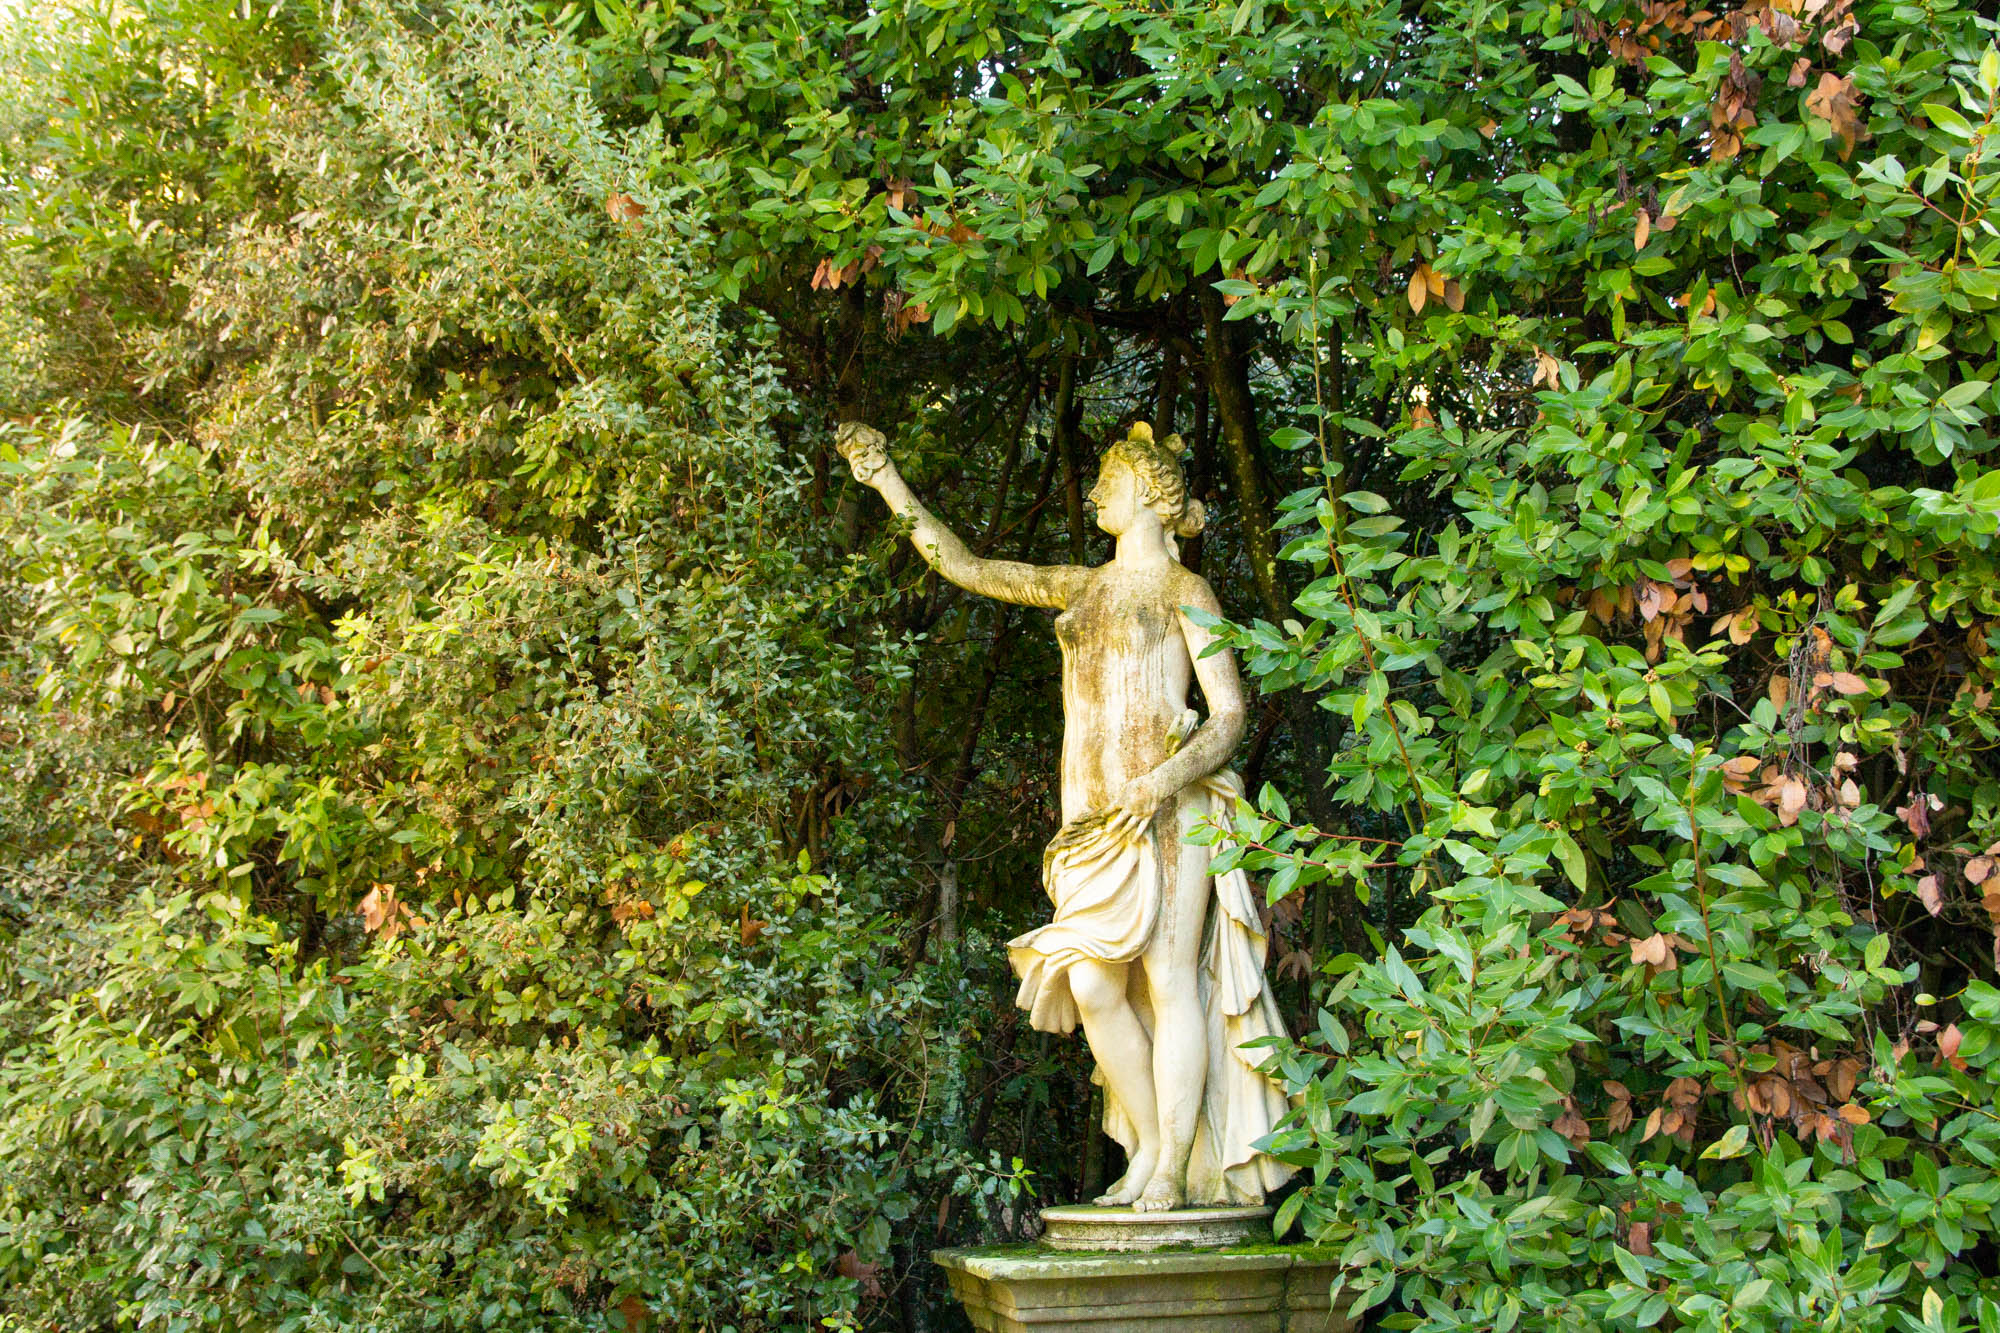 Enchanting Boboli Gardens of Florence